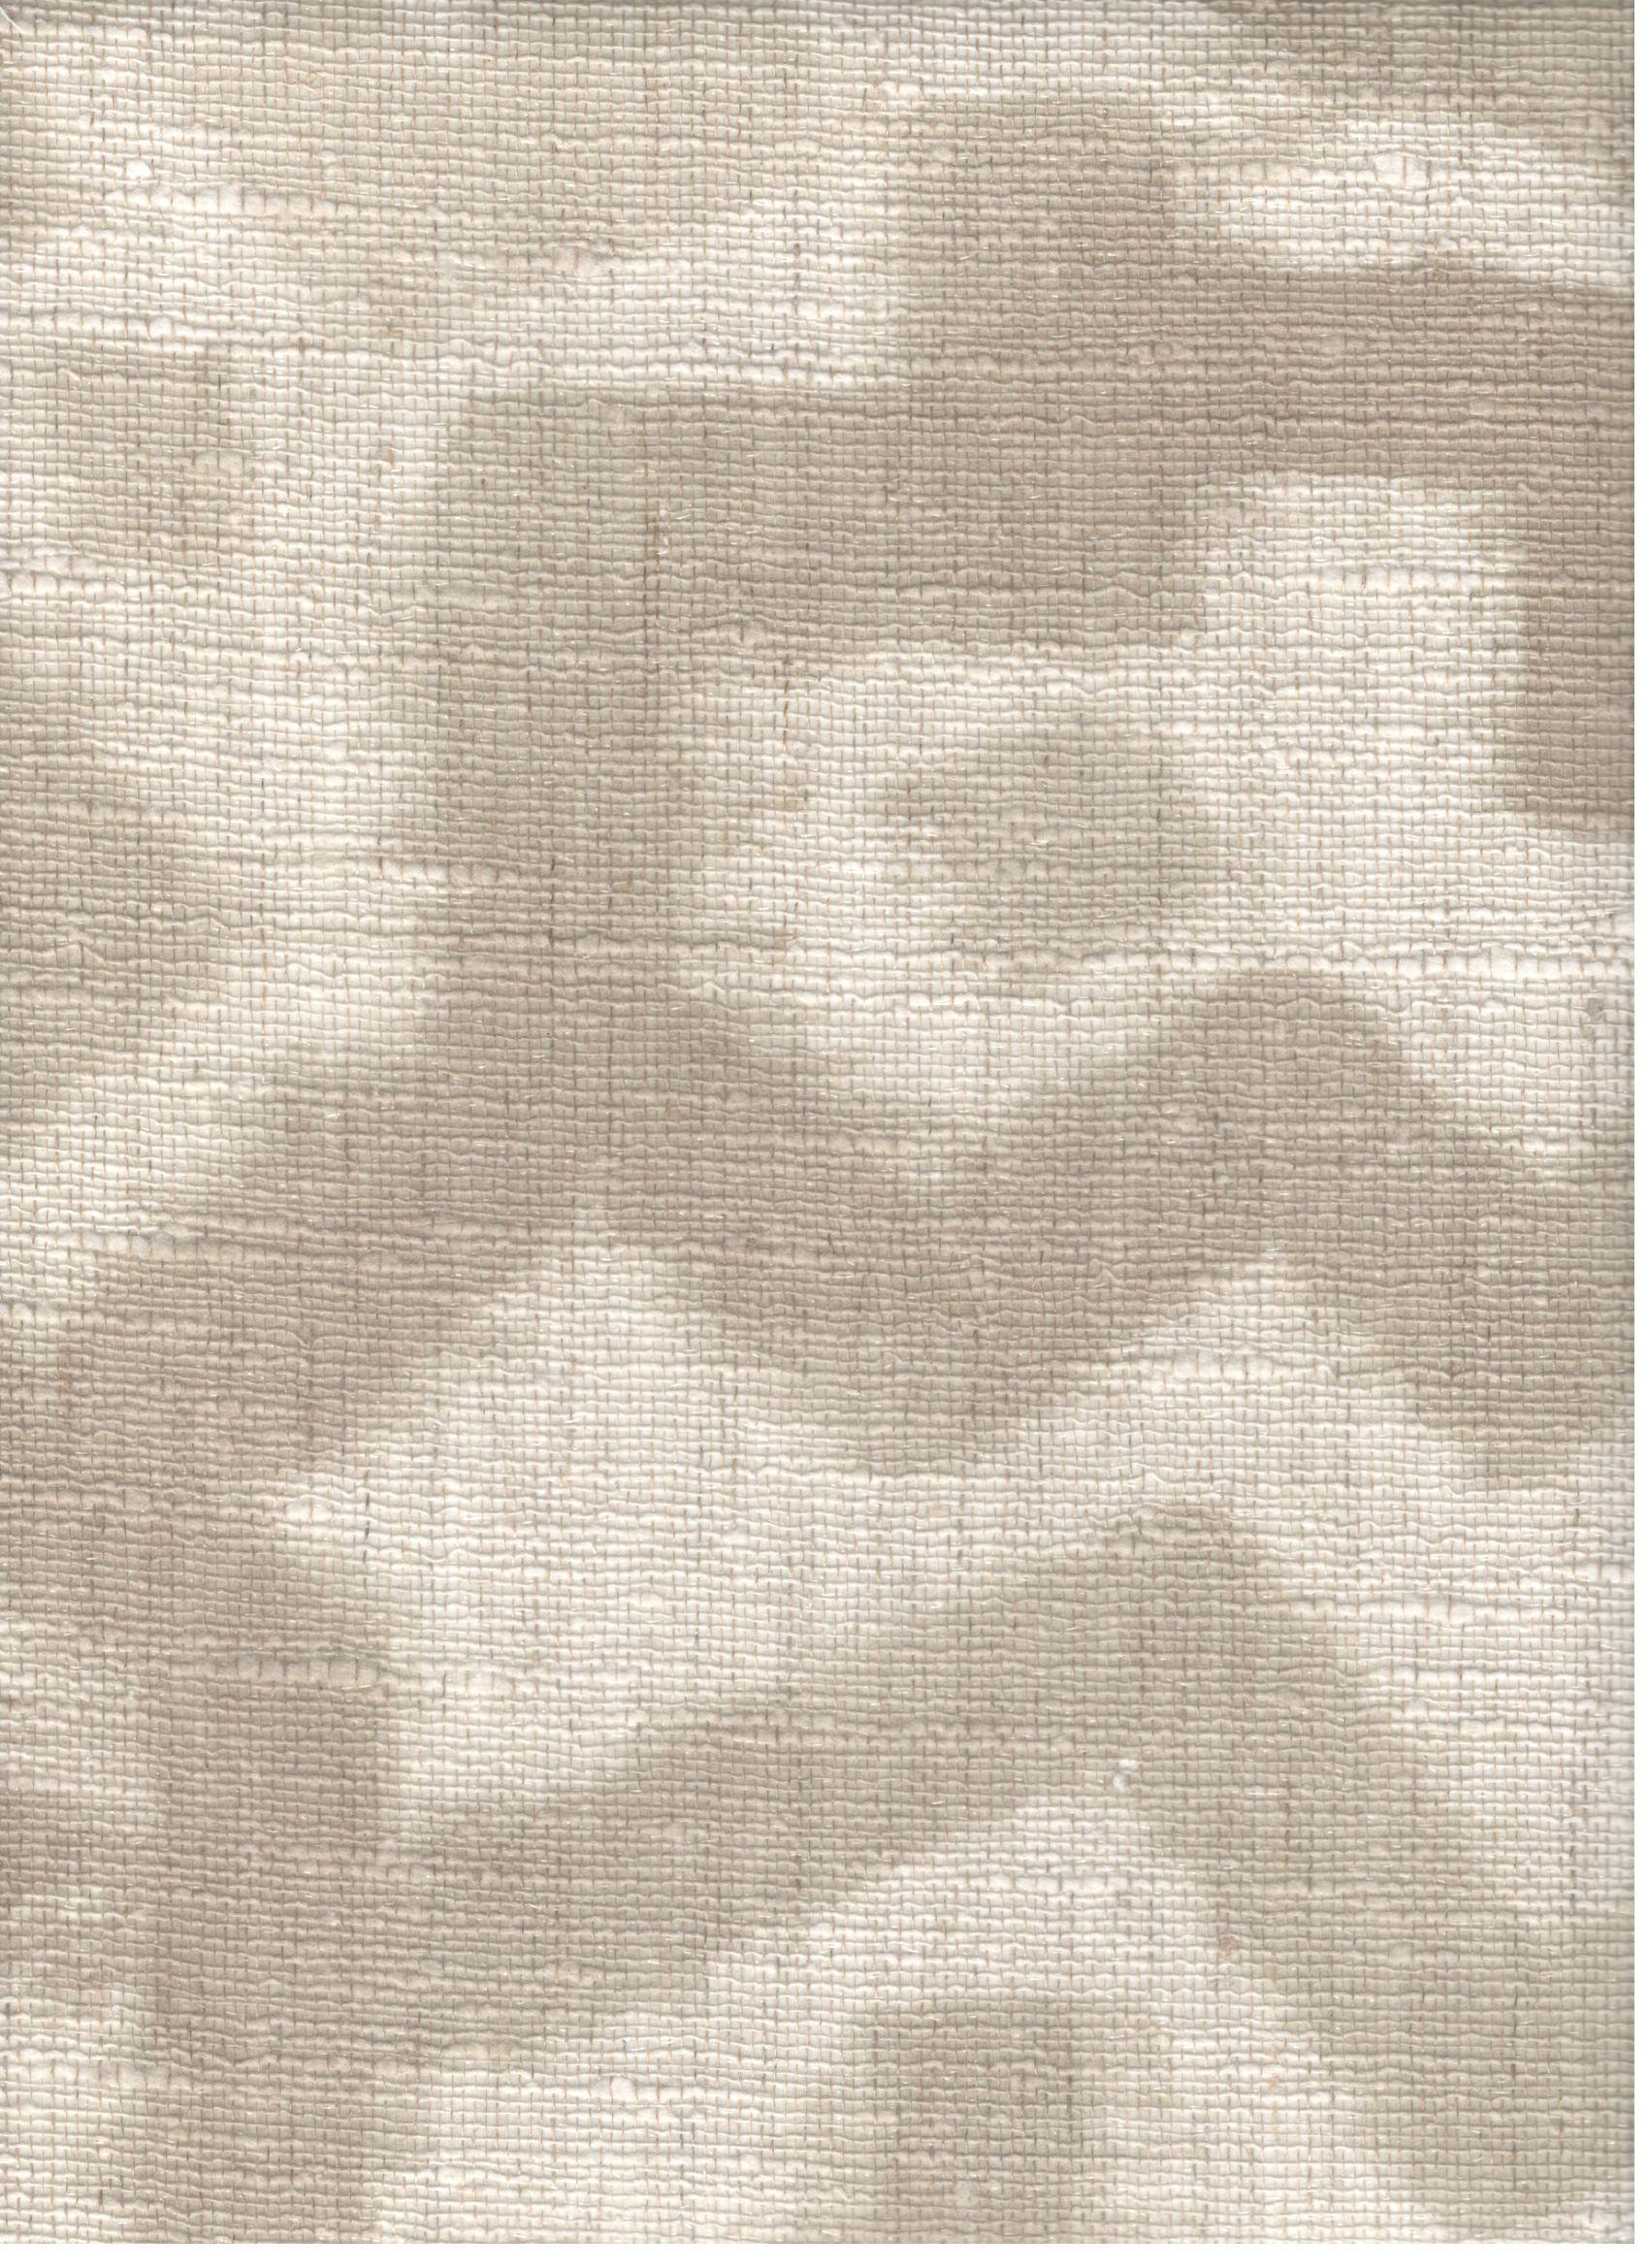 Korean Impression De Terre Printed Wall-covering / Wallpaper, 11 Yard Roll